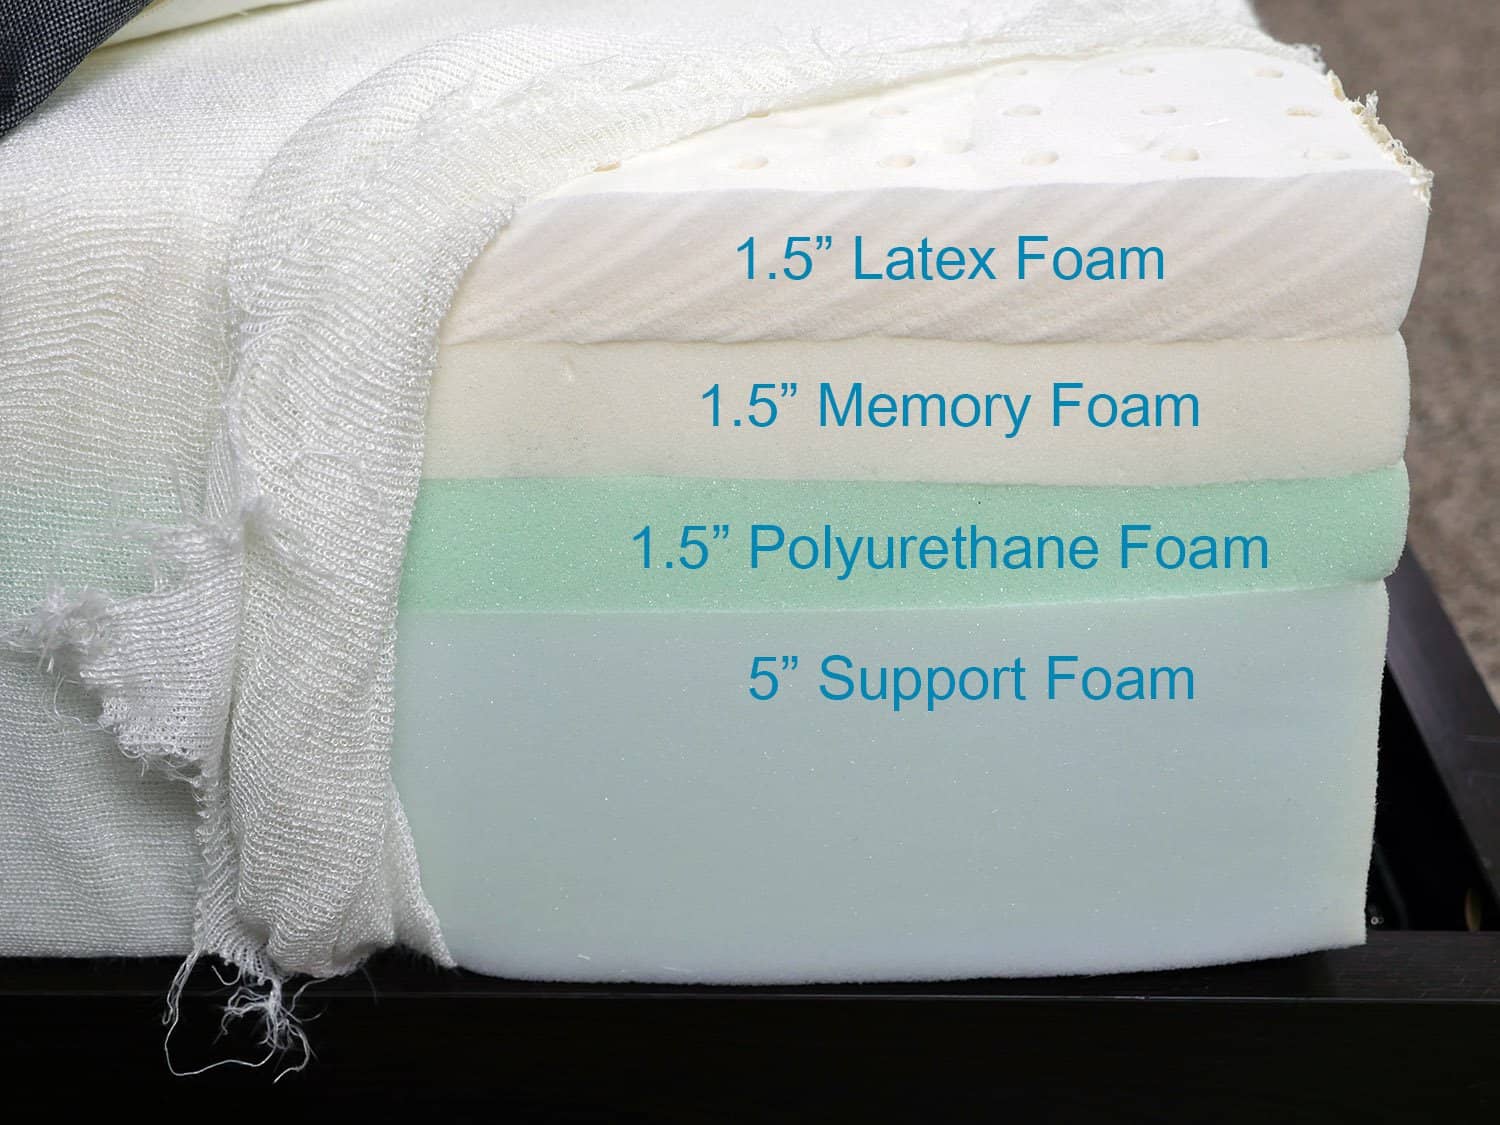 Casper mattress layers (top to bottom) - 1.5" latex foam, 1.5" me...